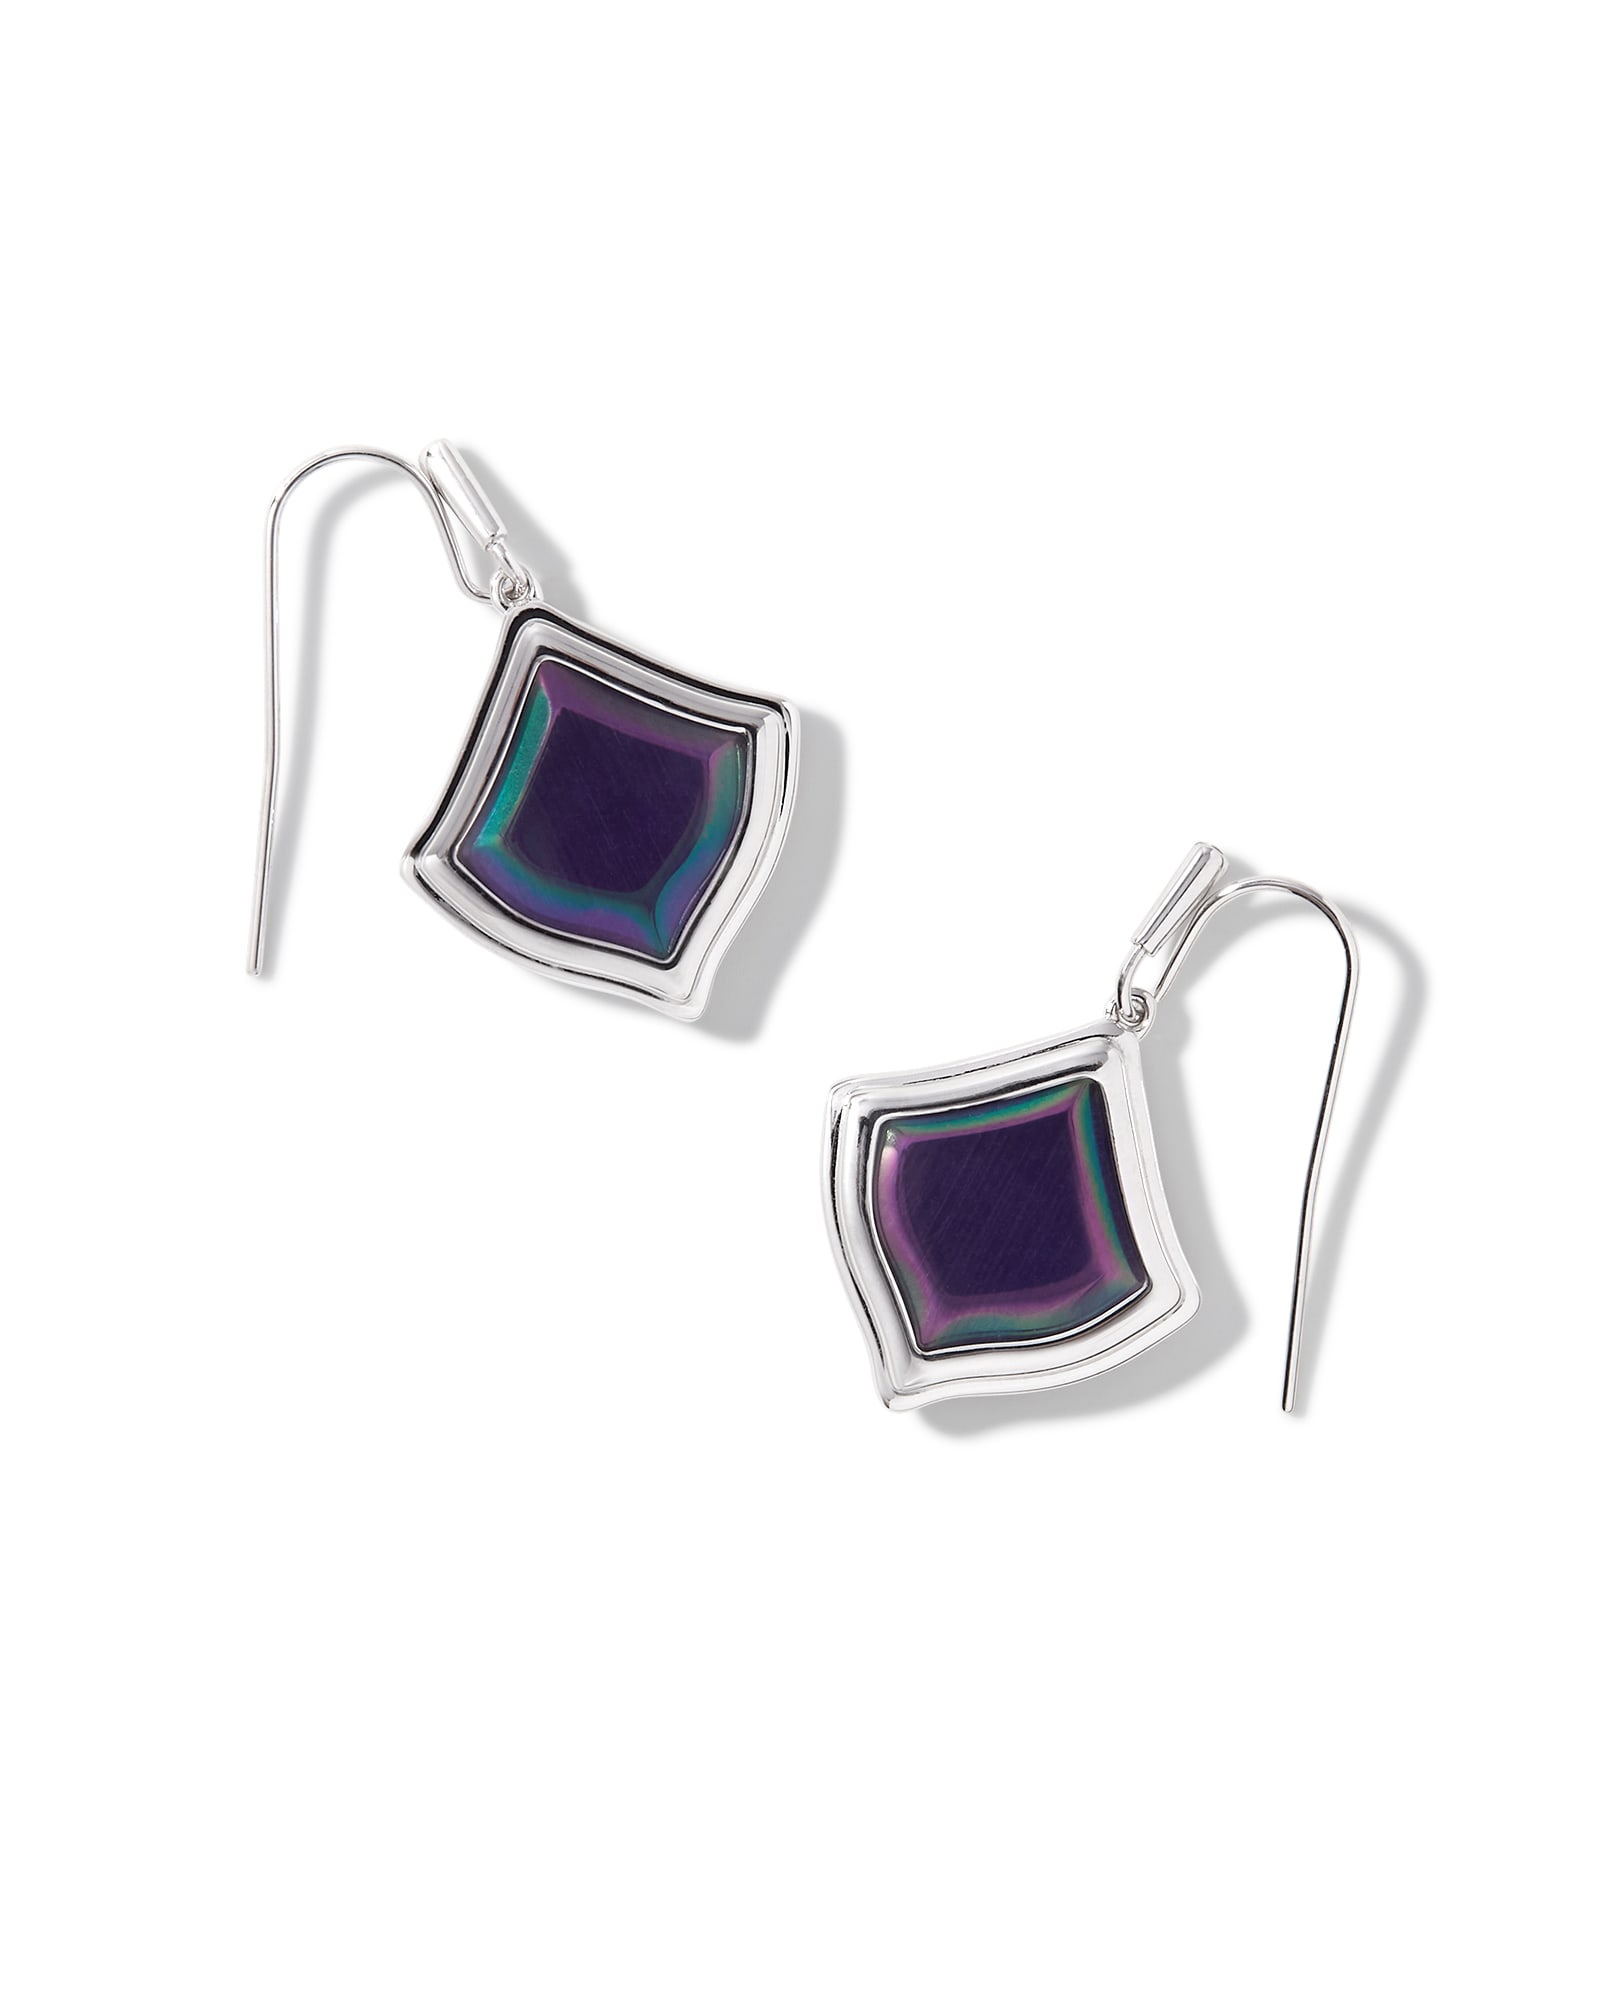 Abbie Silver Drop Earrings in Iridescent Abalone | Kendra Scott